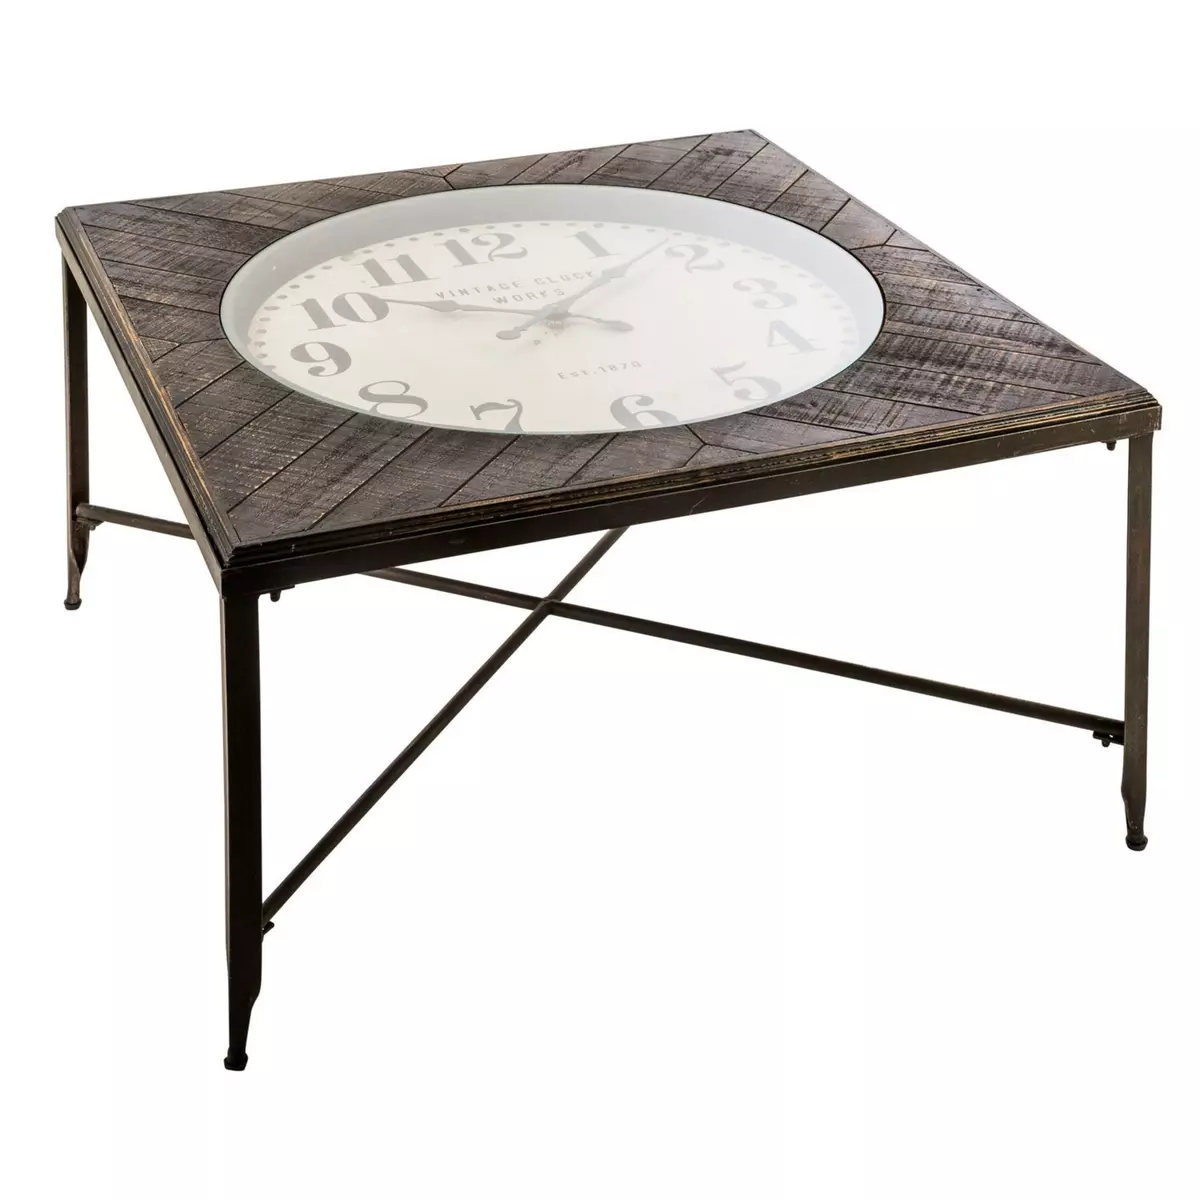 ATMOSPHERA Table basse avec horloge Chrono - L. 91 x H. 46 cm - Gris